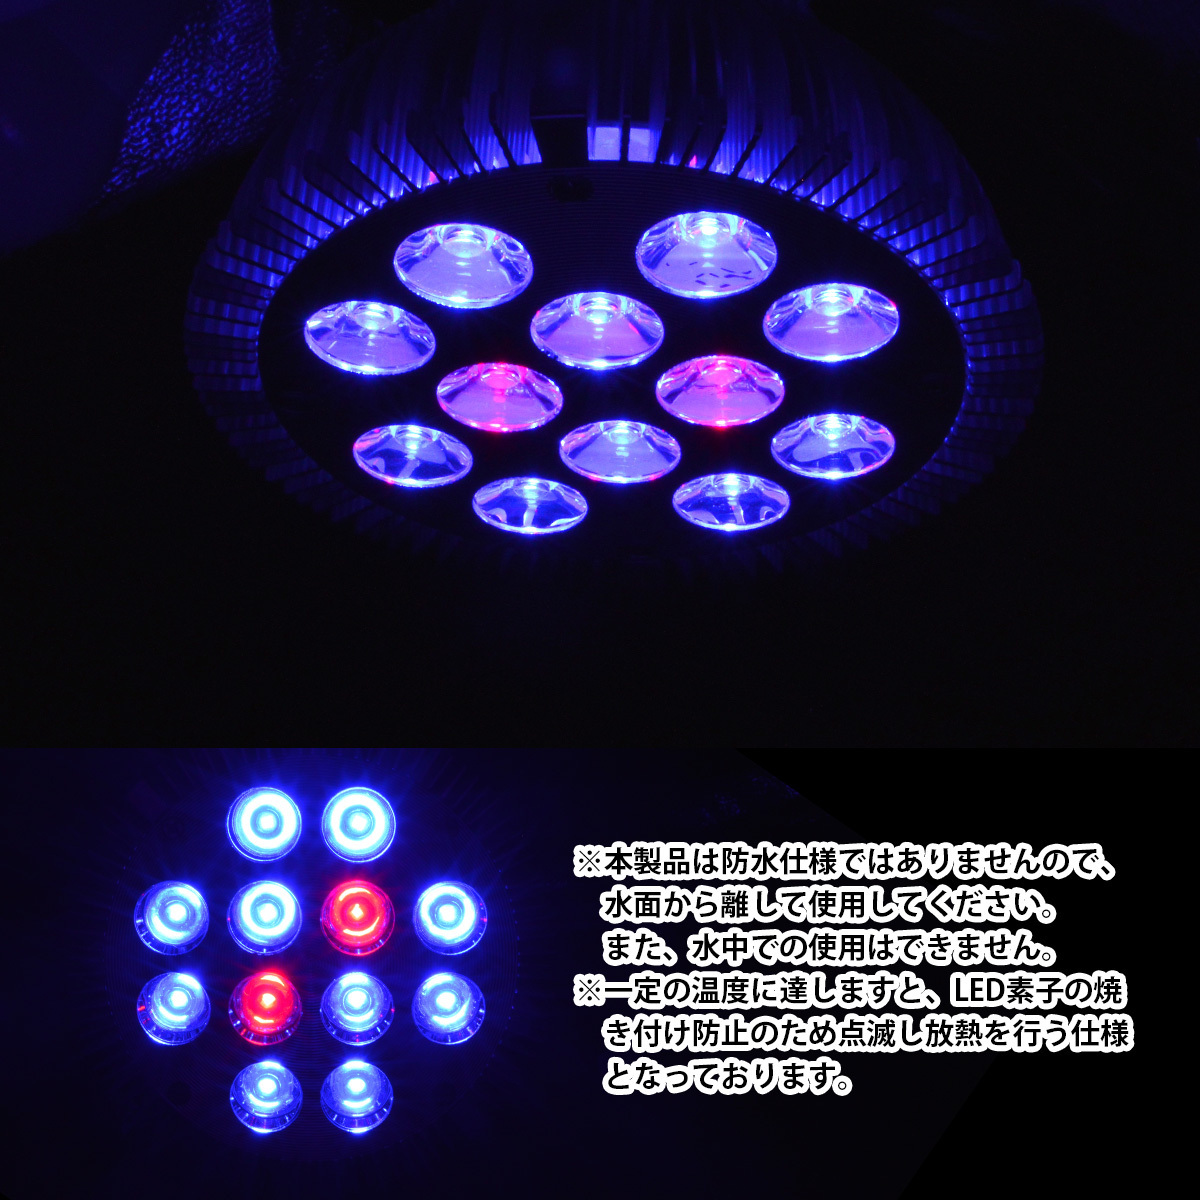 LED 電球 スポットライト 24W(2W×12)青10赤2 水槽 照明 E26 LEDスポットライト 電気 水草 サンゴ 熱帯魚 観賞魚 植物育成_画像4